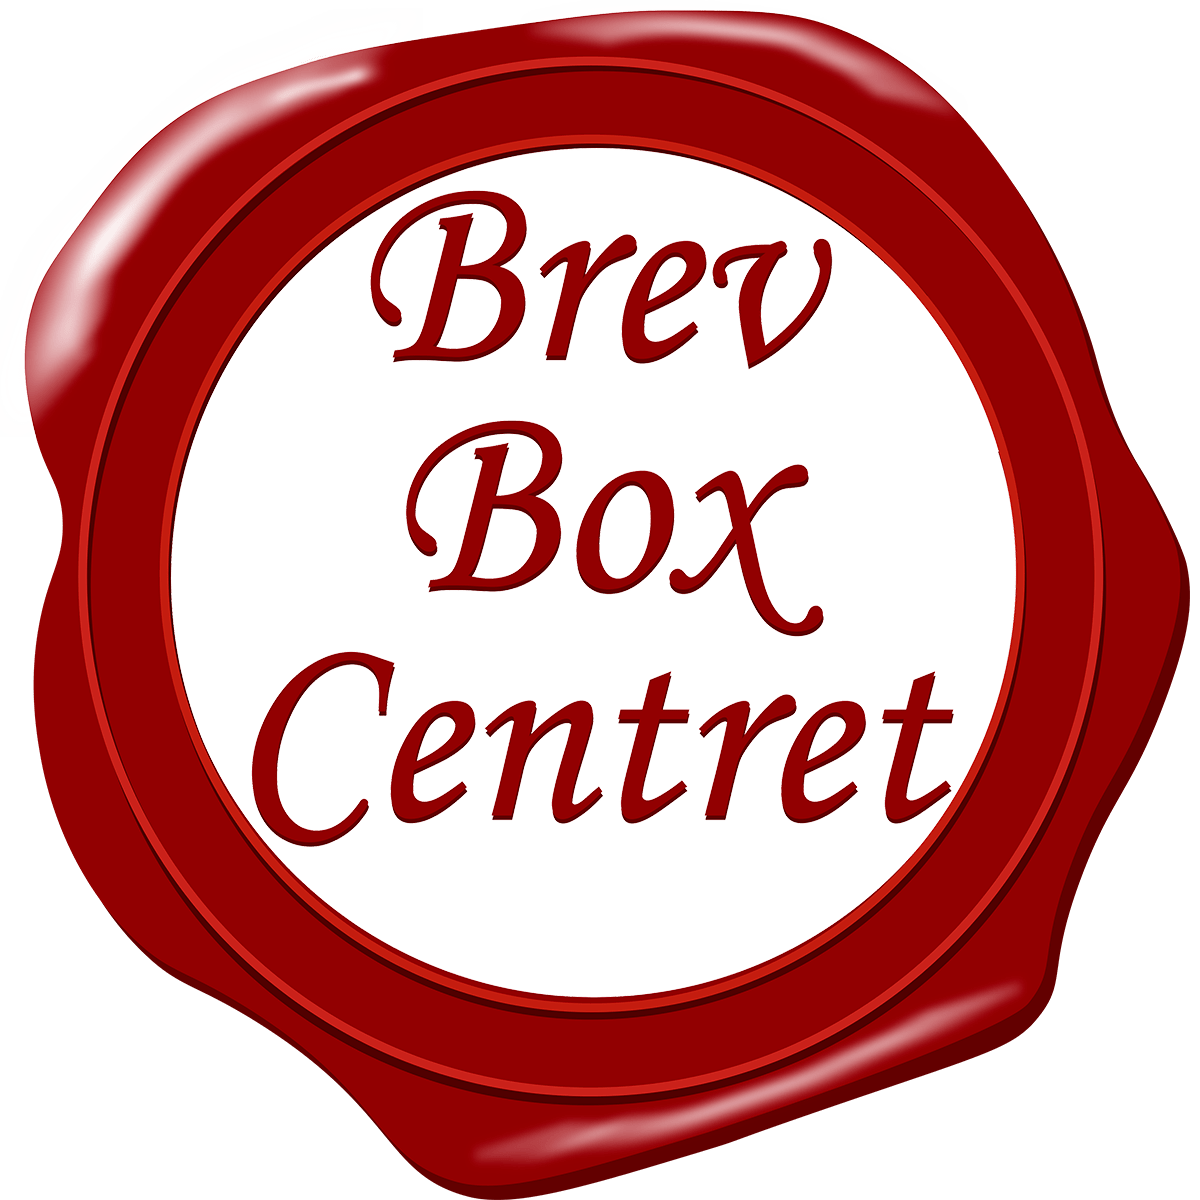 Brev Box Centret - Firmaadresse